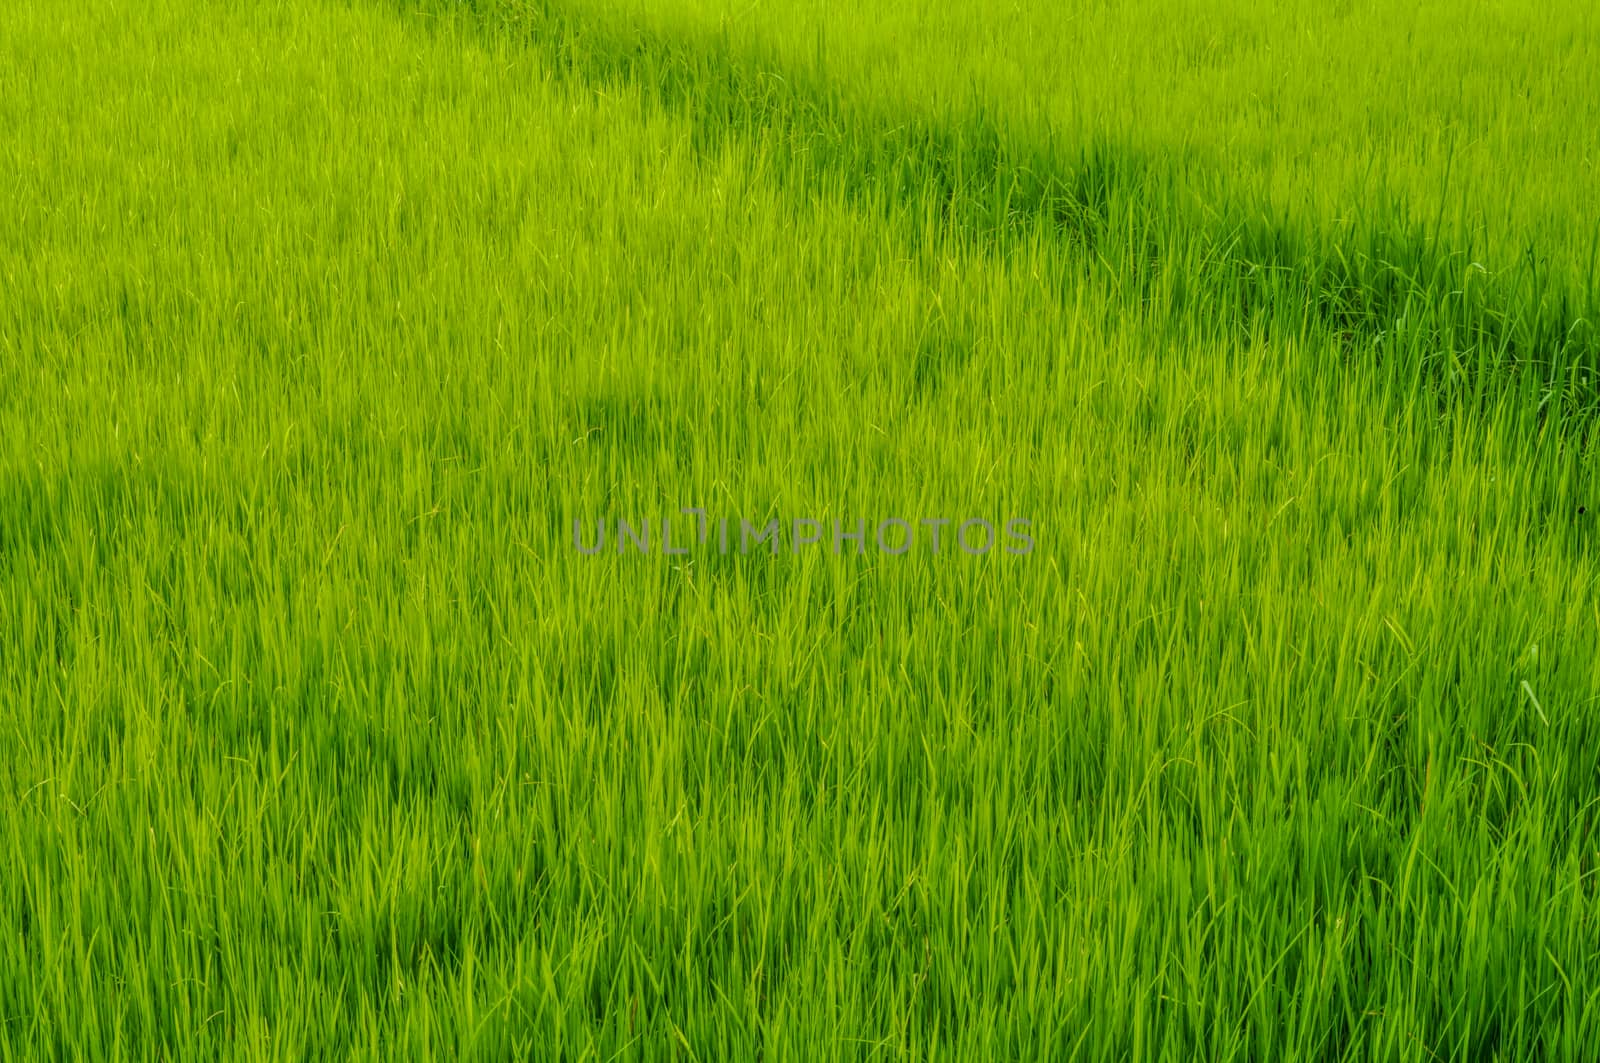 Rice field by MichalKnitl